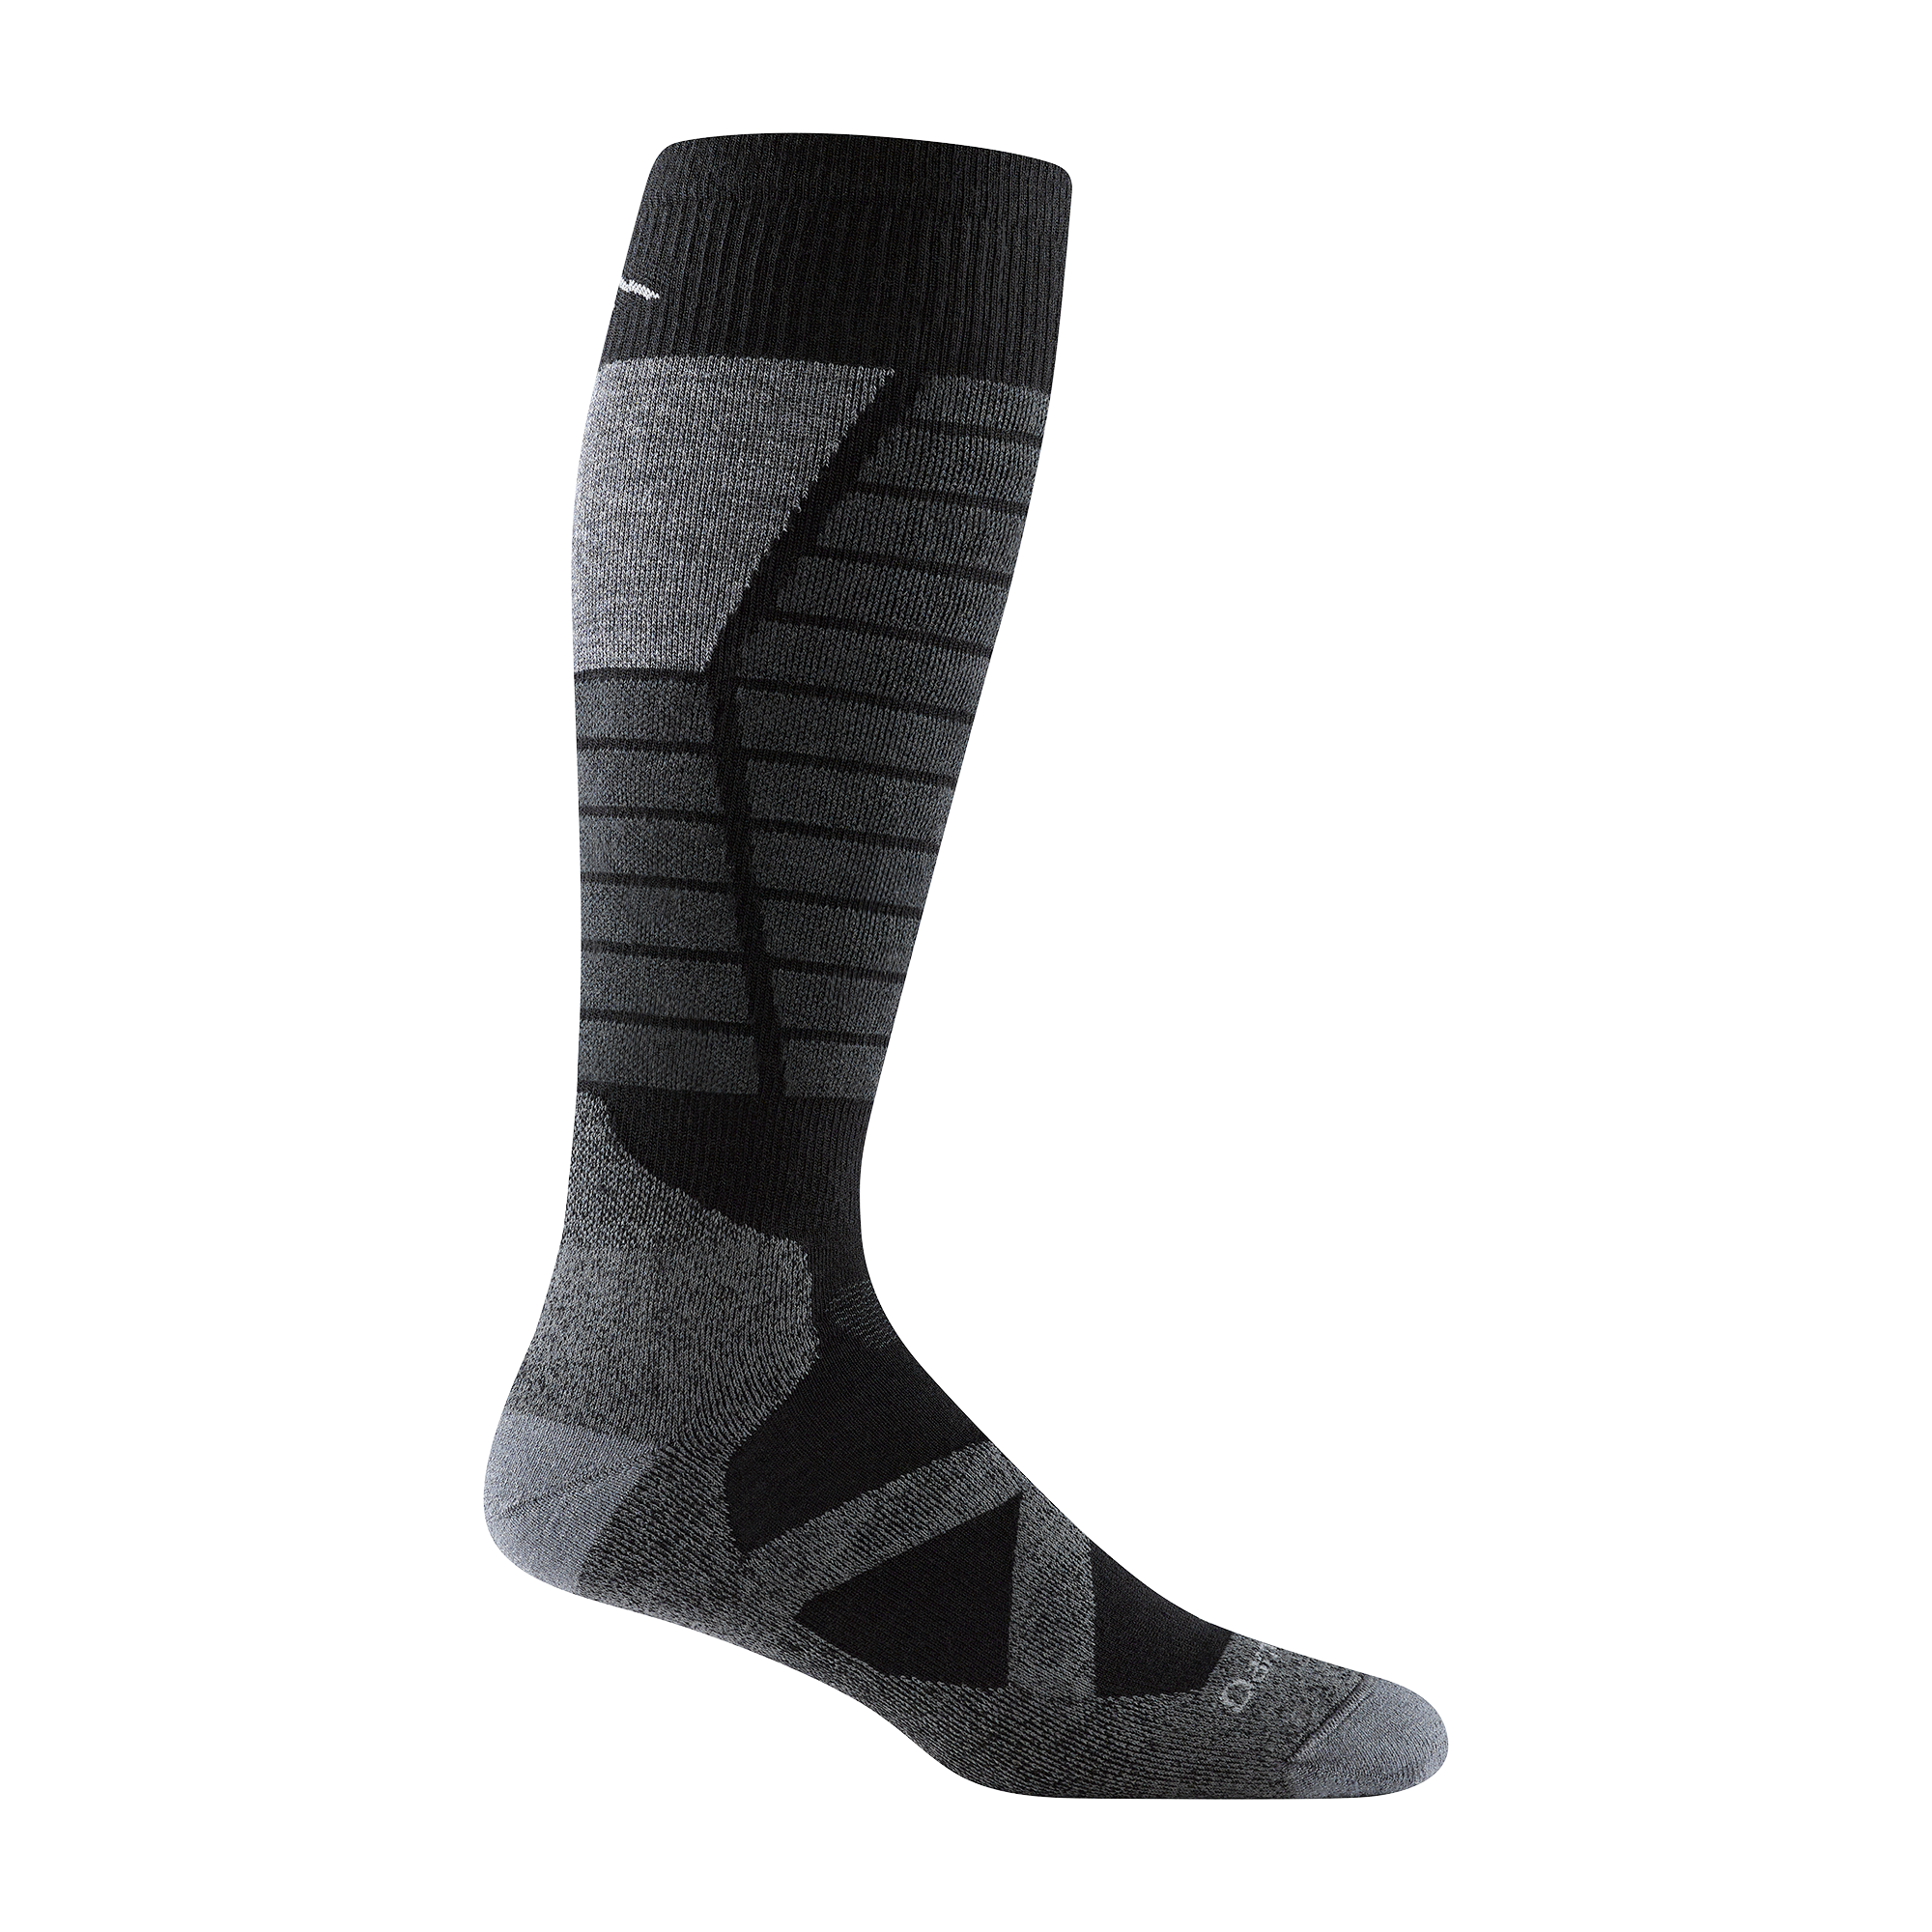 8044 Function X Ski and Snowboard sock in Black with light gray toe/heel/ calf vent, dark gray stripes on shin